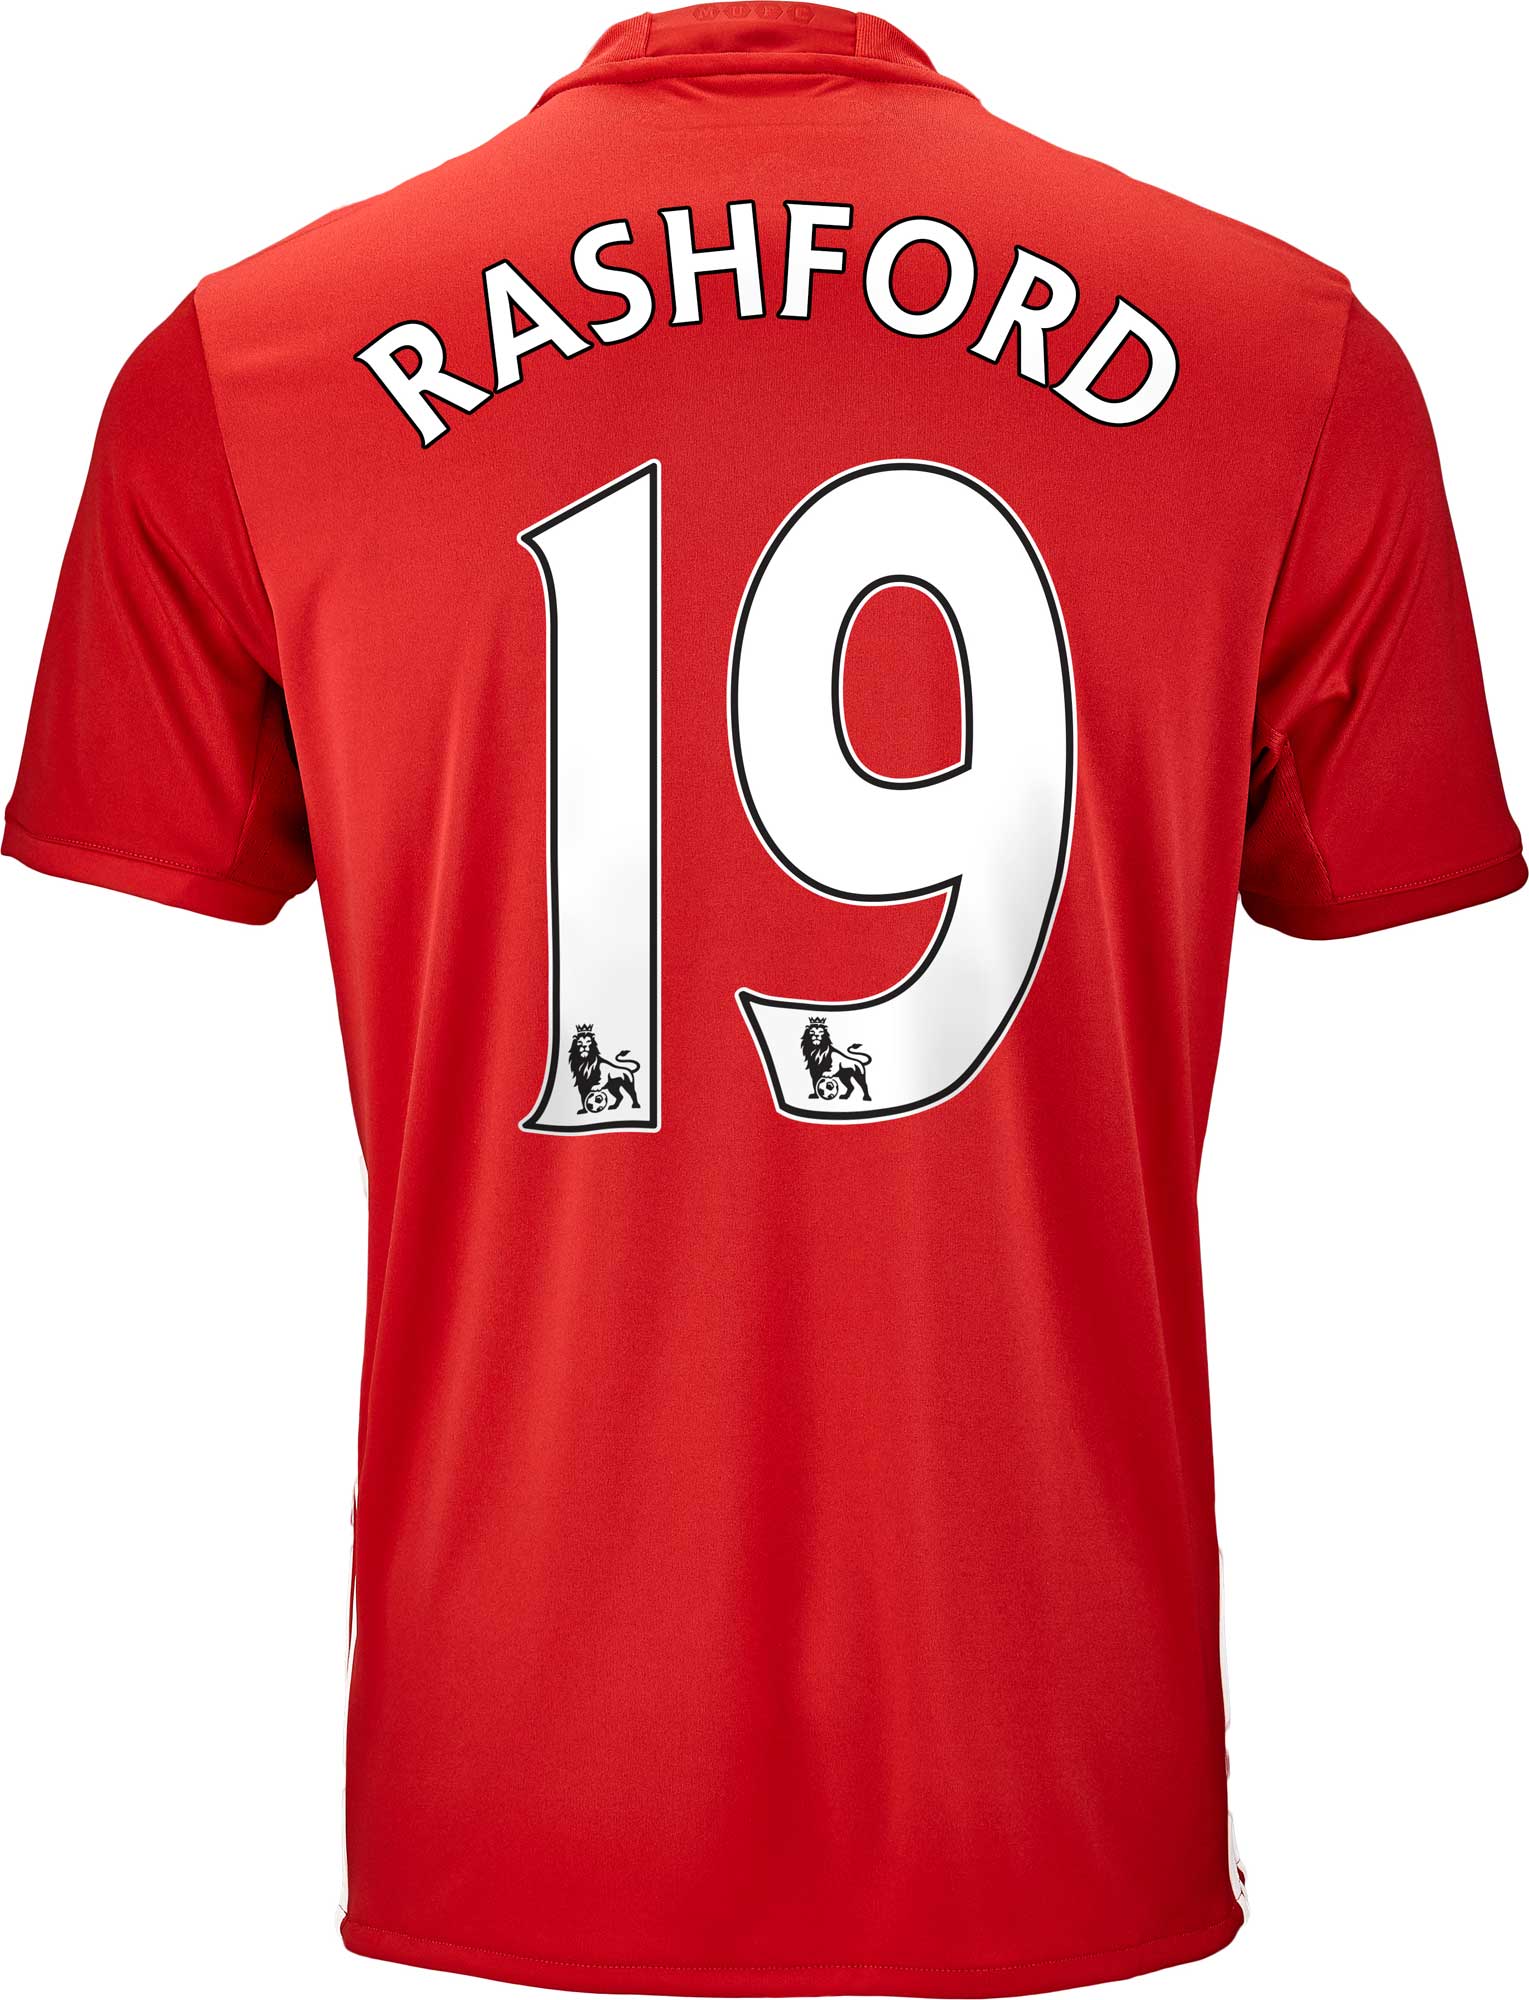 adidas Rashford Manchester United Jersey - 2016 Man United Jerseys